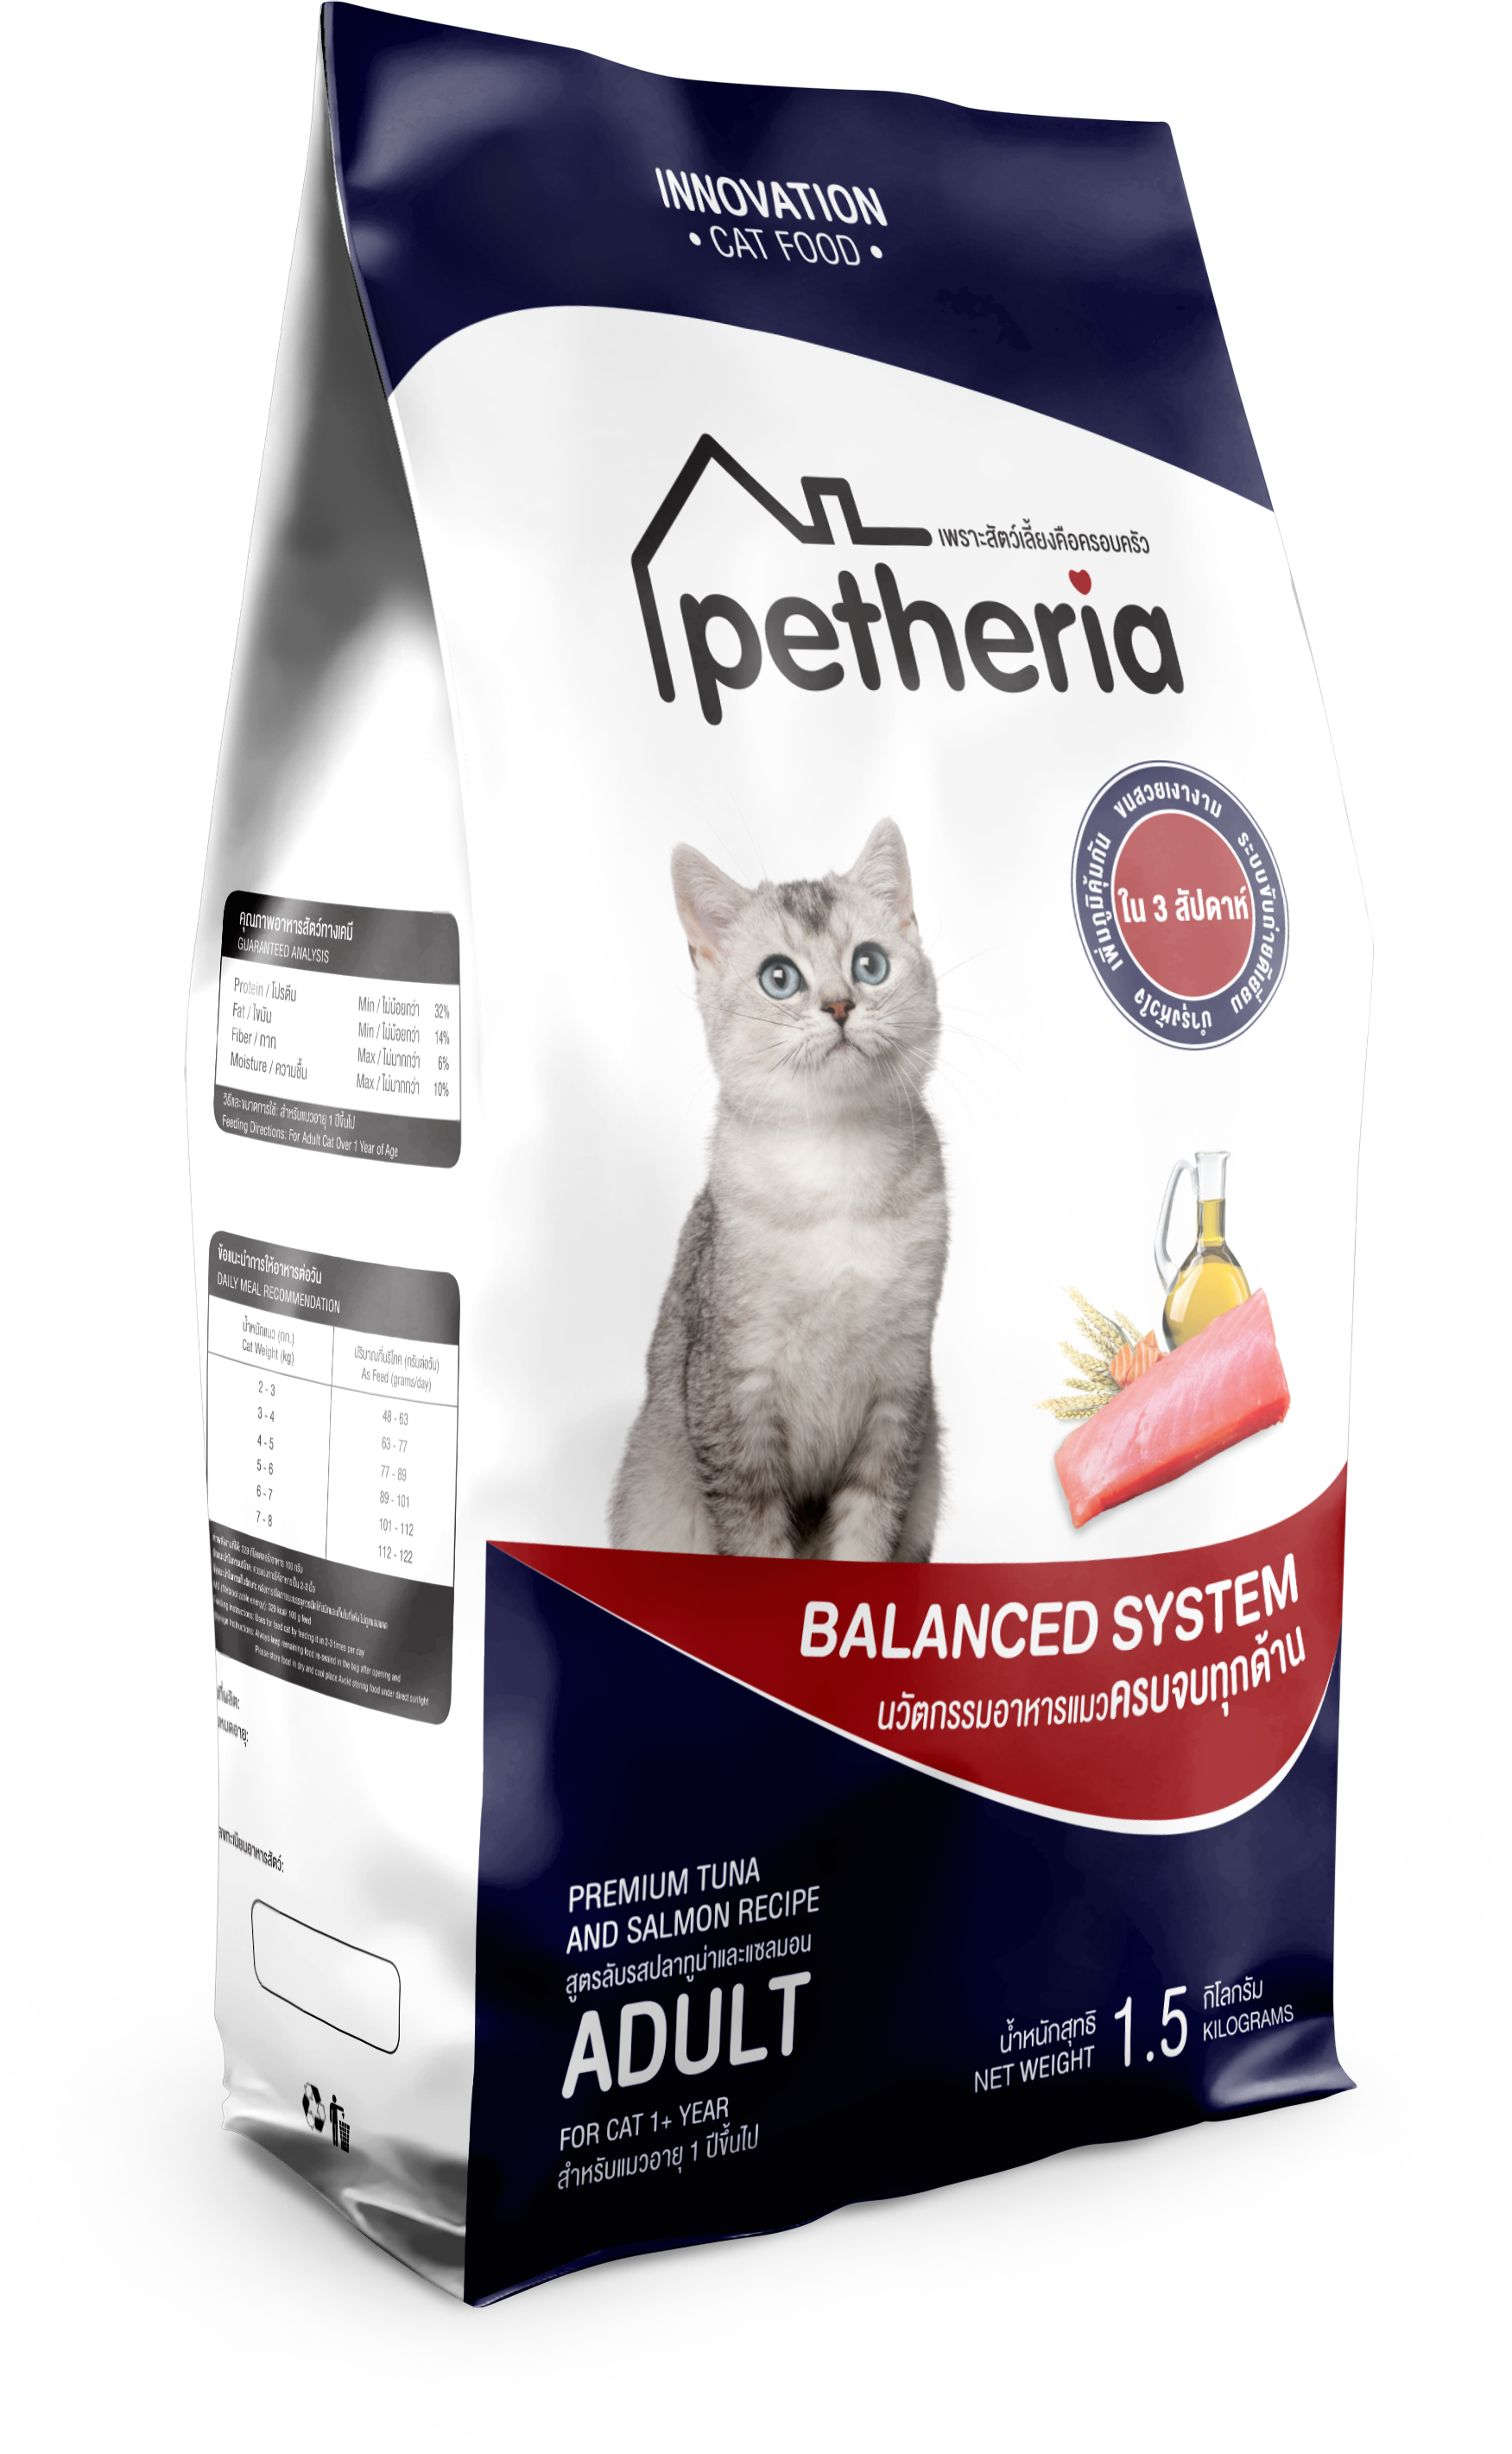 petheria Innovation Cat Food [Balanced System] [No Corn ...